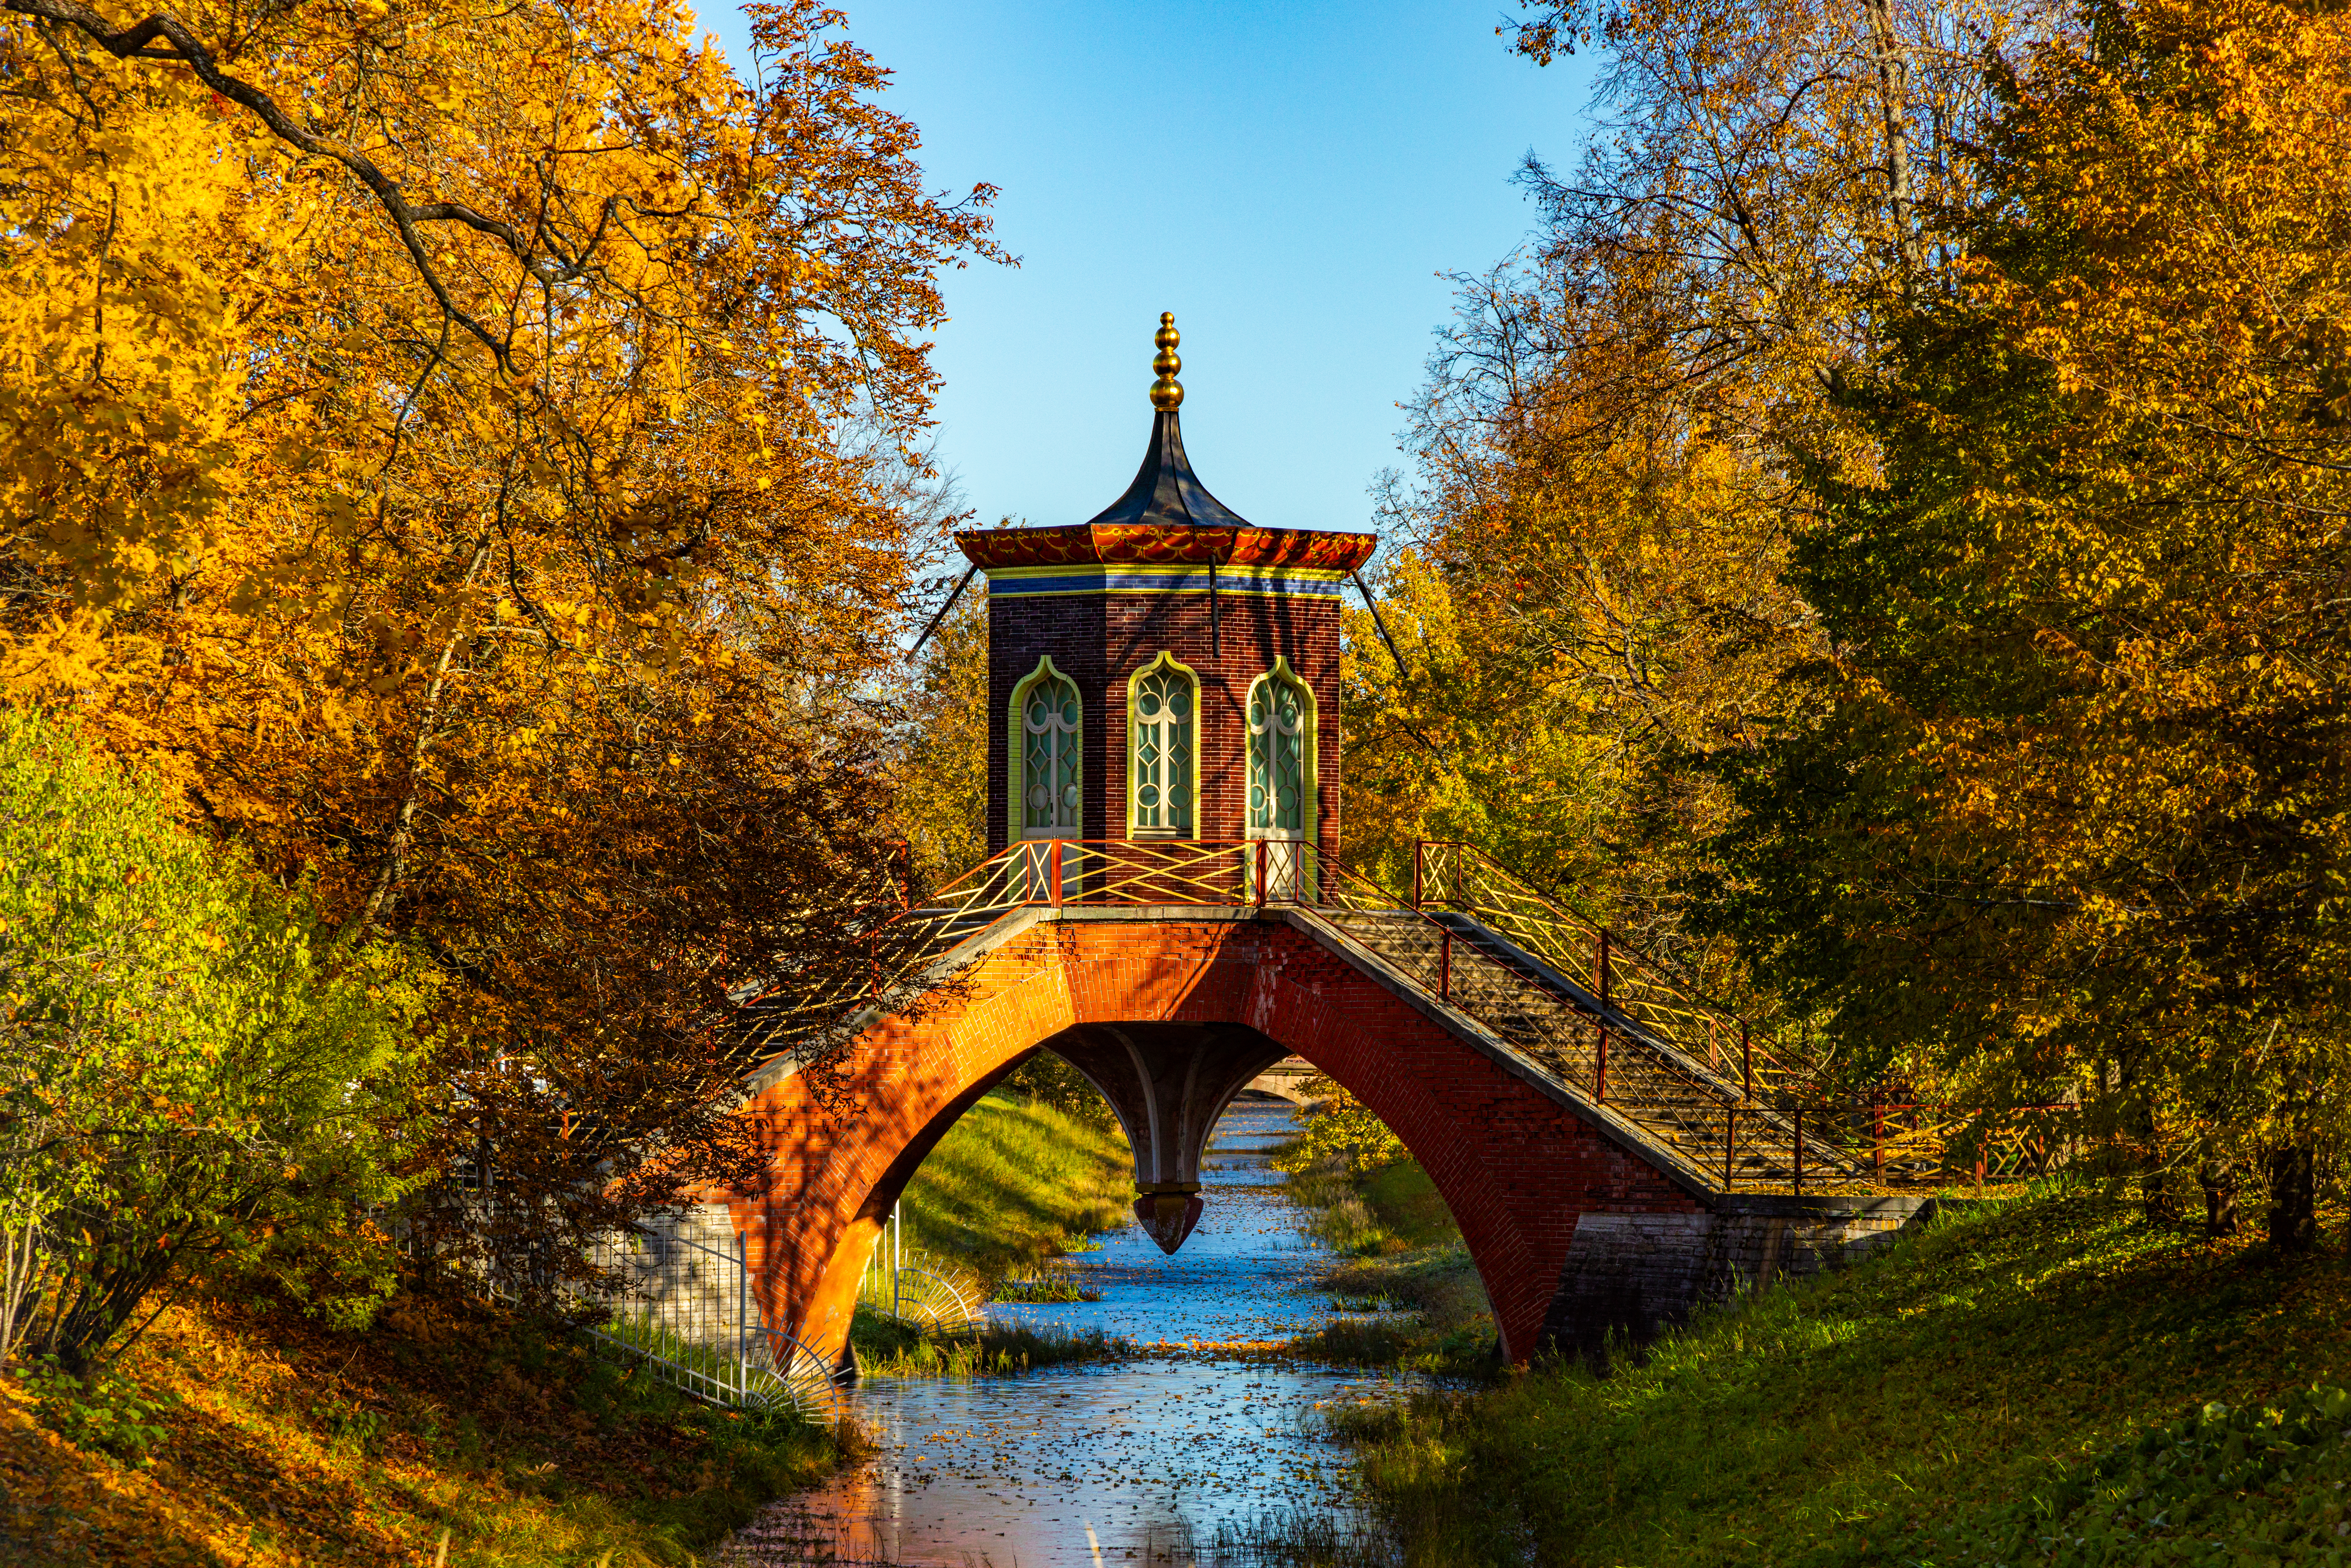 The Krestovy Bridge